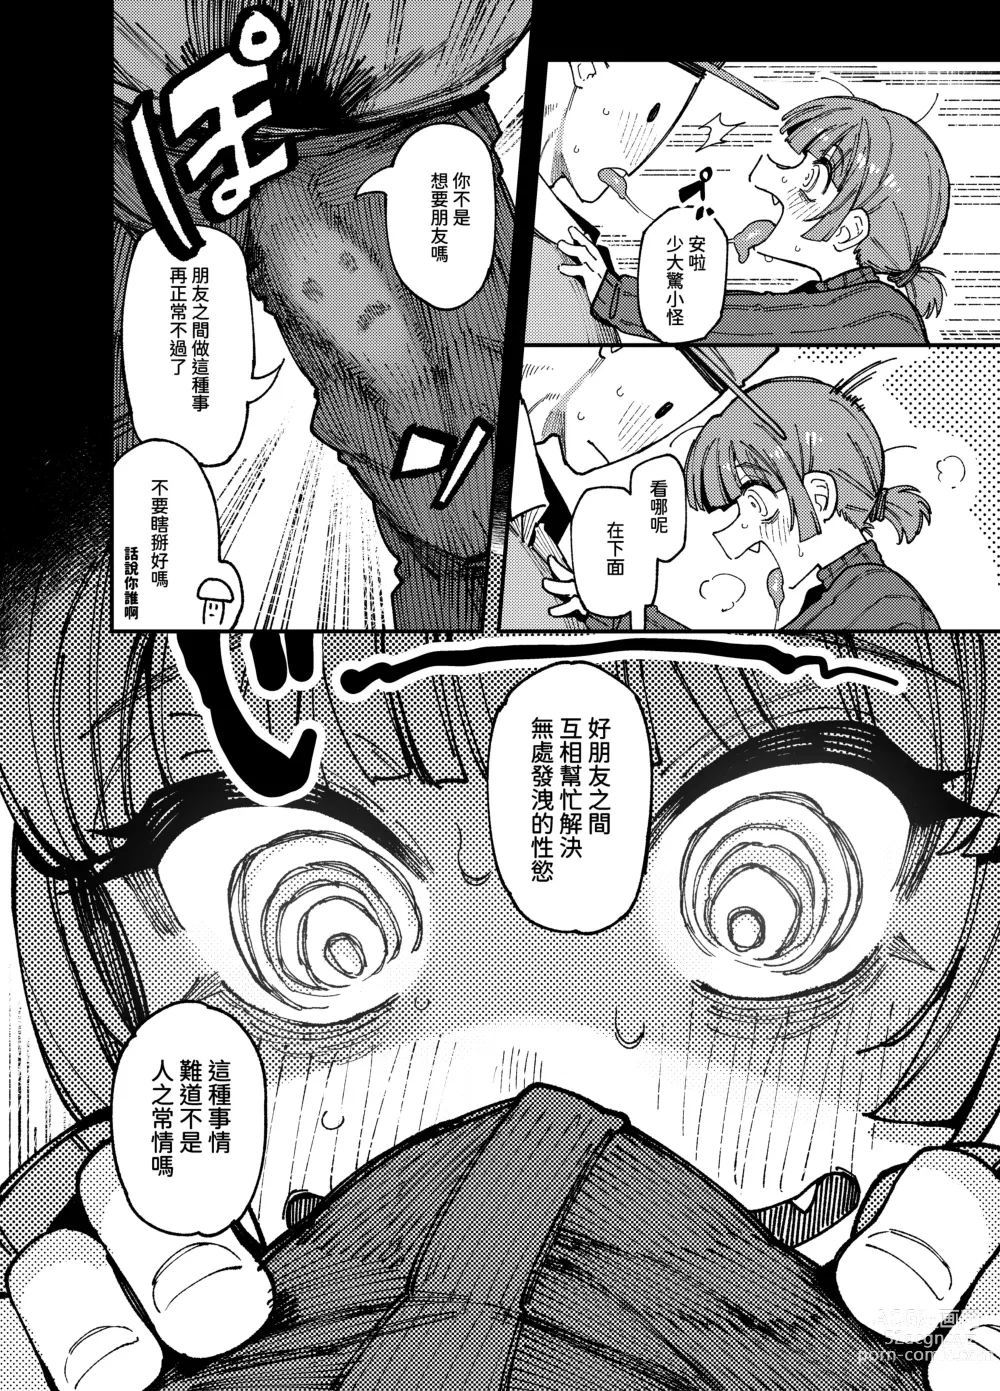 Page 13 of doujinshi 家裡過於潮濕長出致幻蘑菇意外誤食後發情的那些事